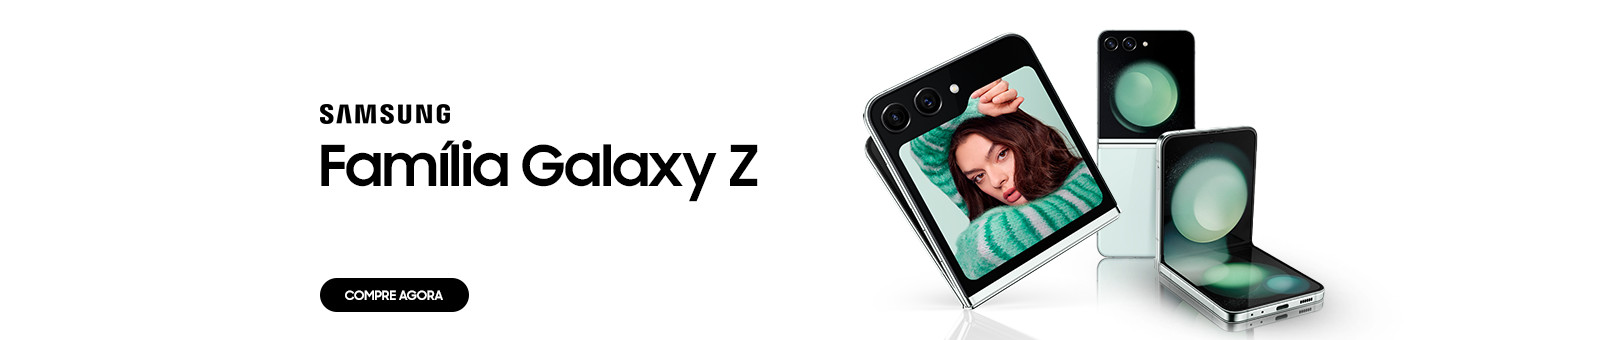 Samsung. Família Galaxy Z. Compre agora.